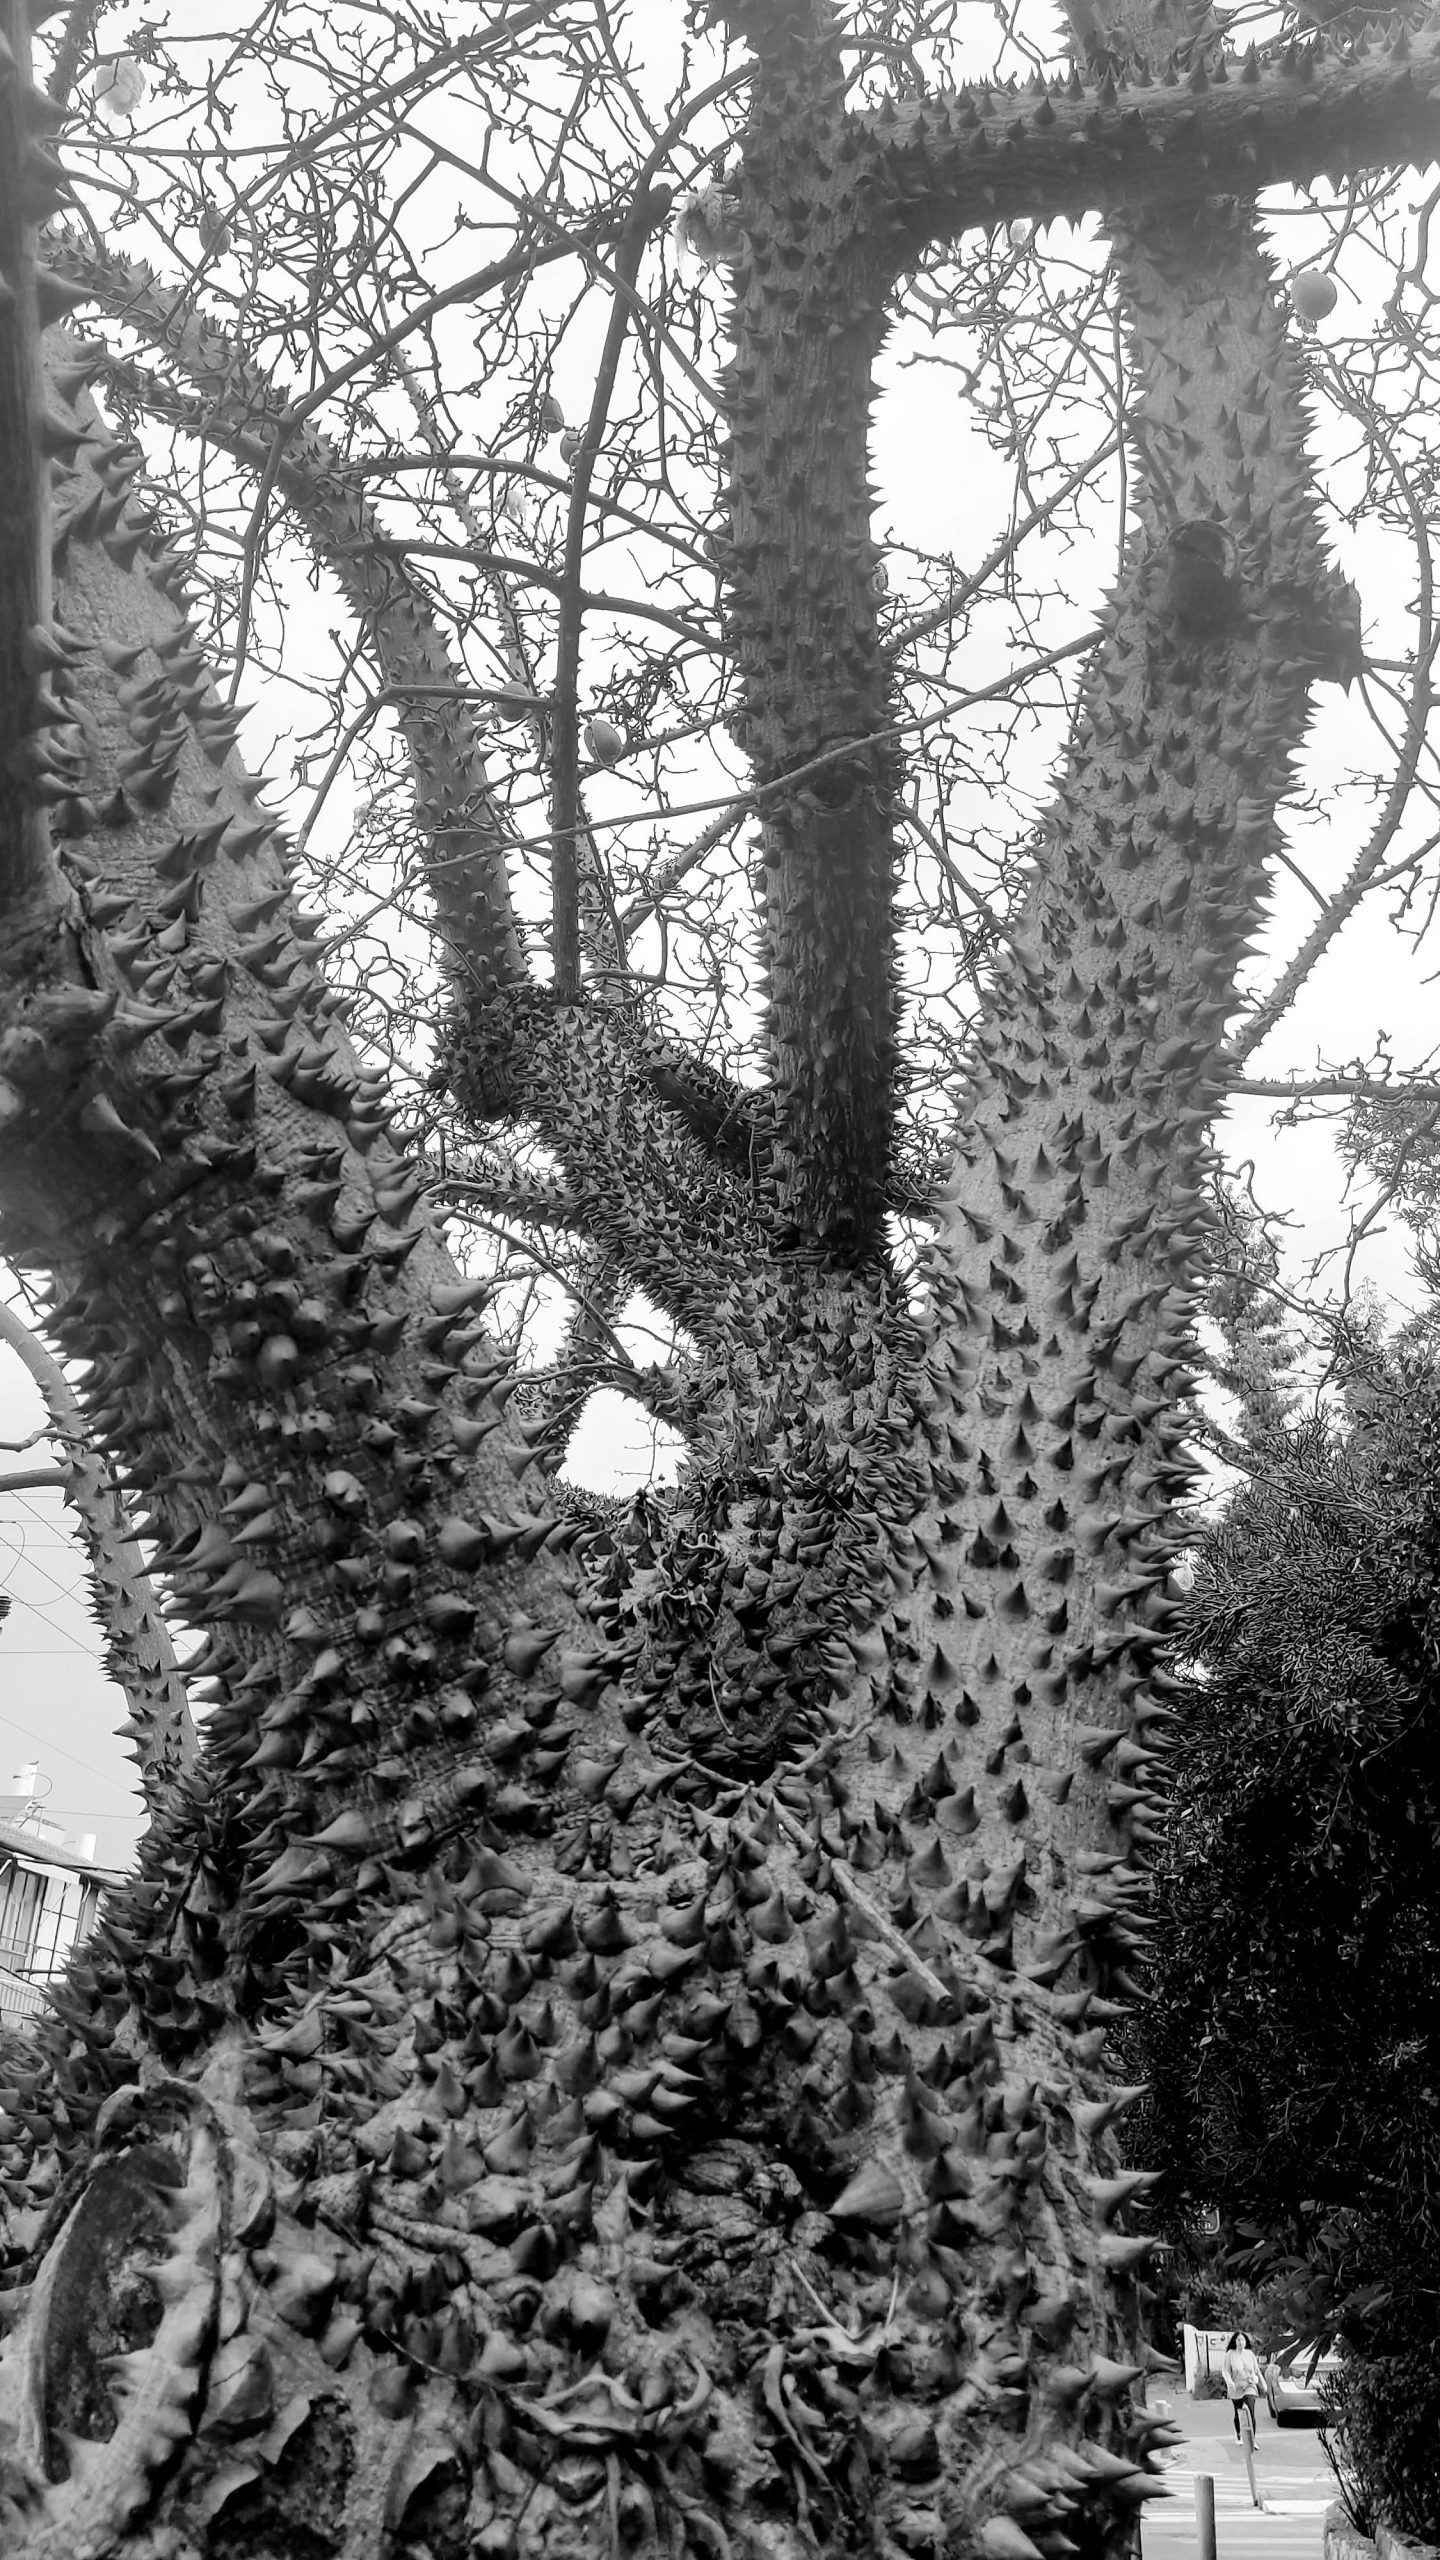 Prickly tree